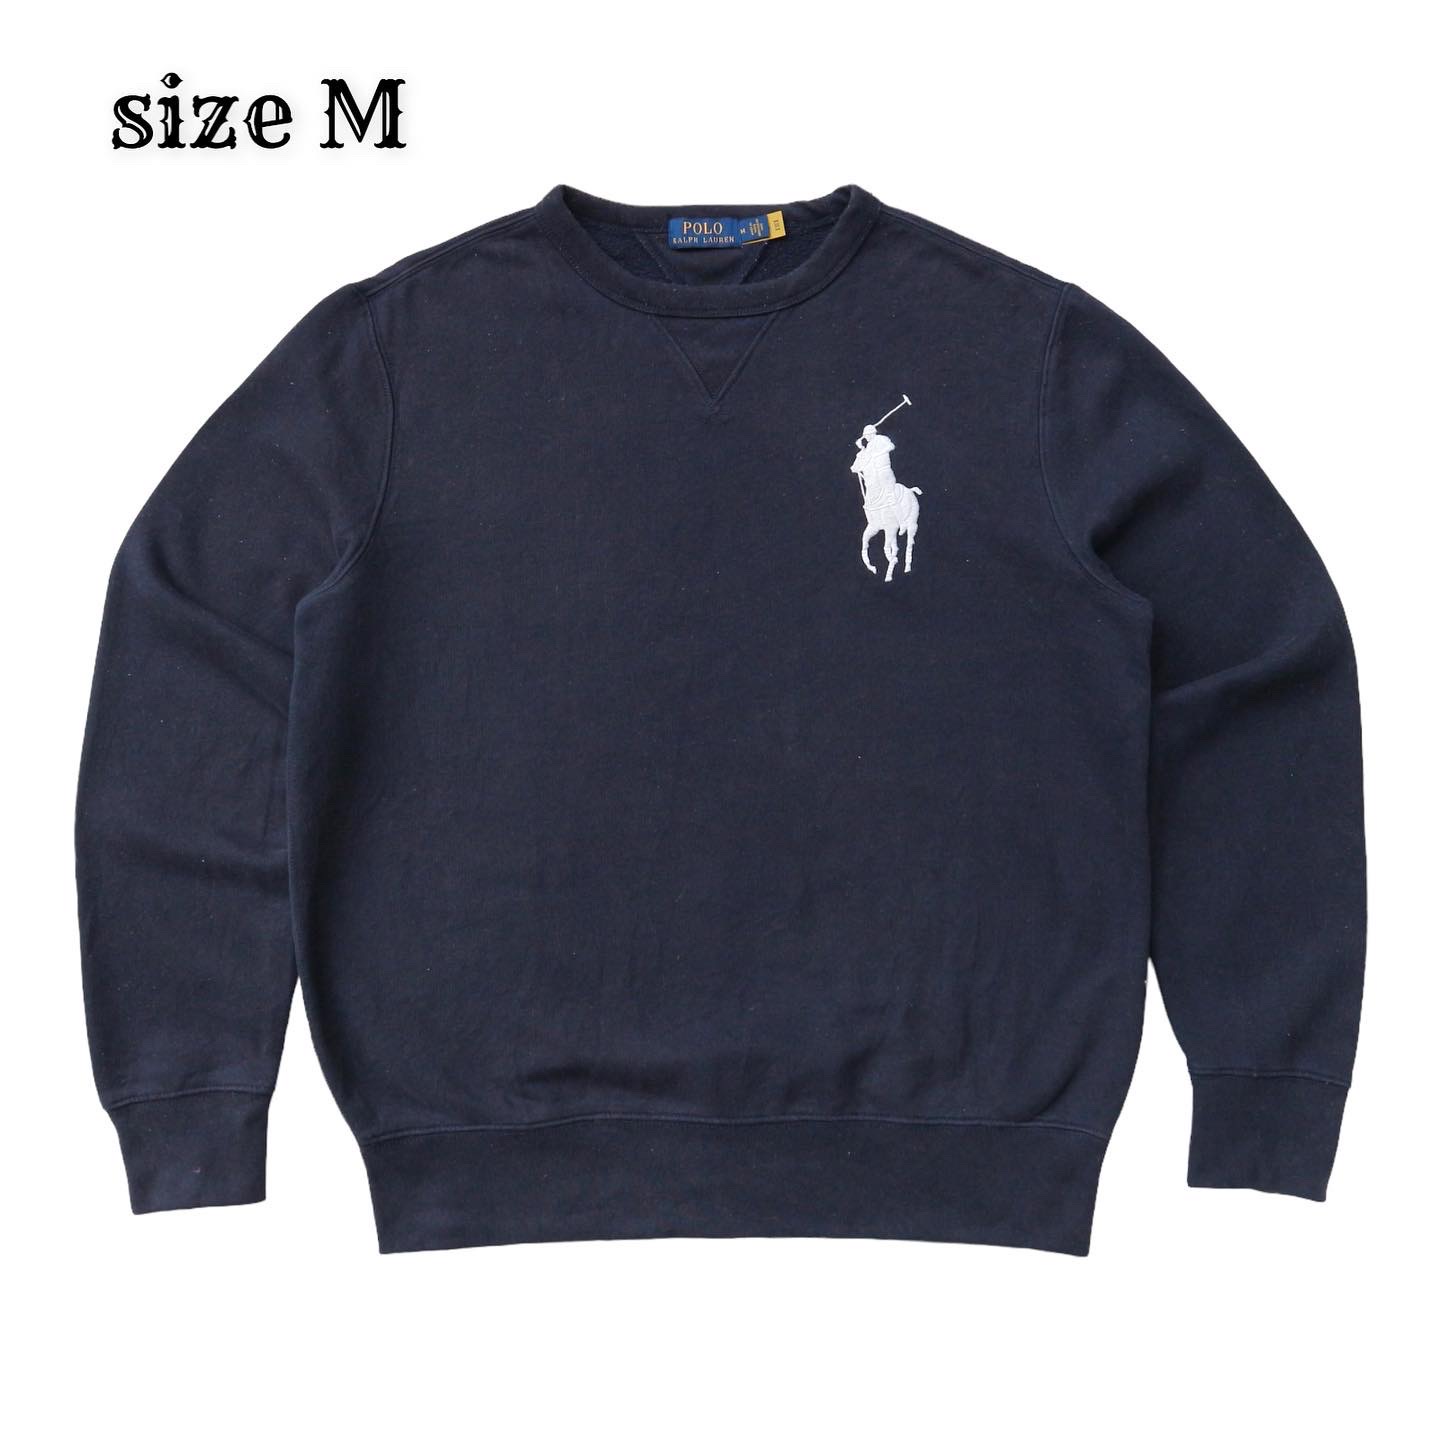 Polo Ralph Lauren Sweater Size M